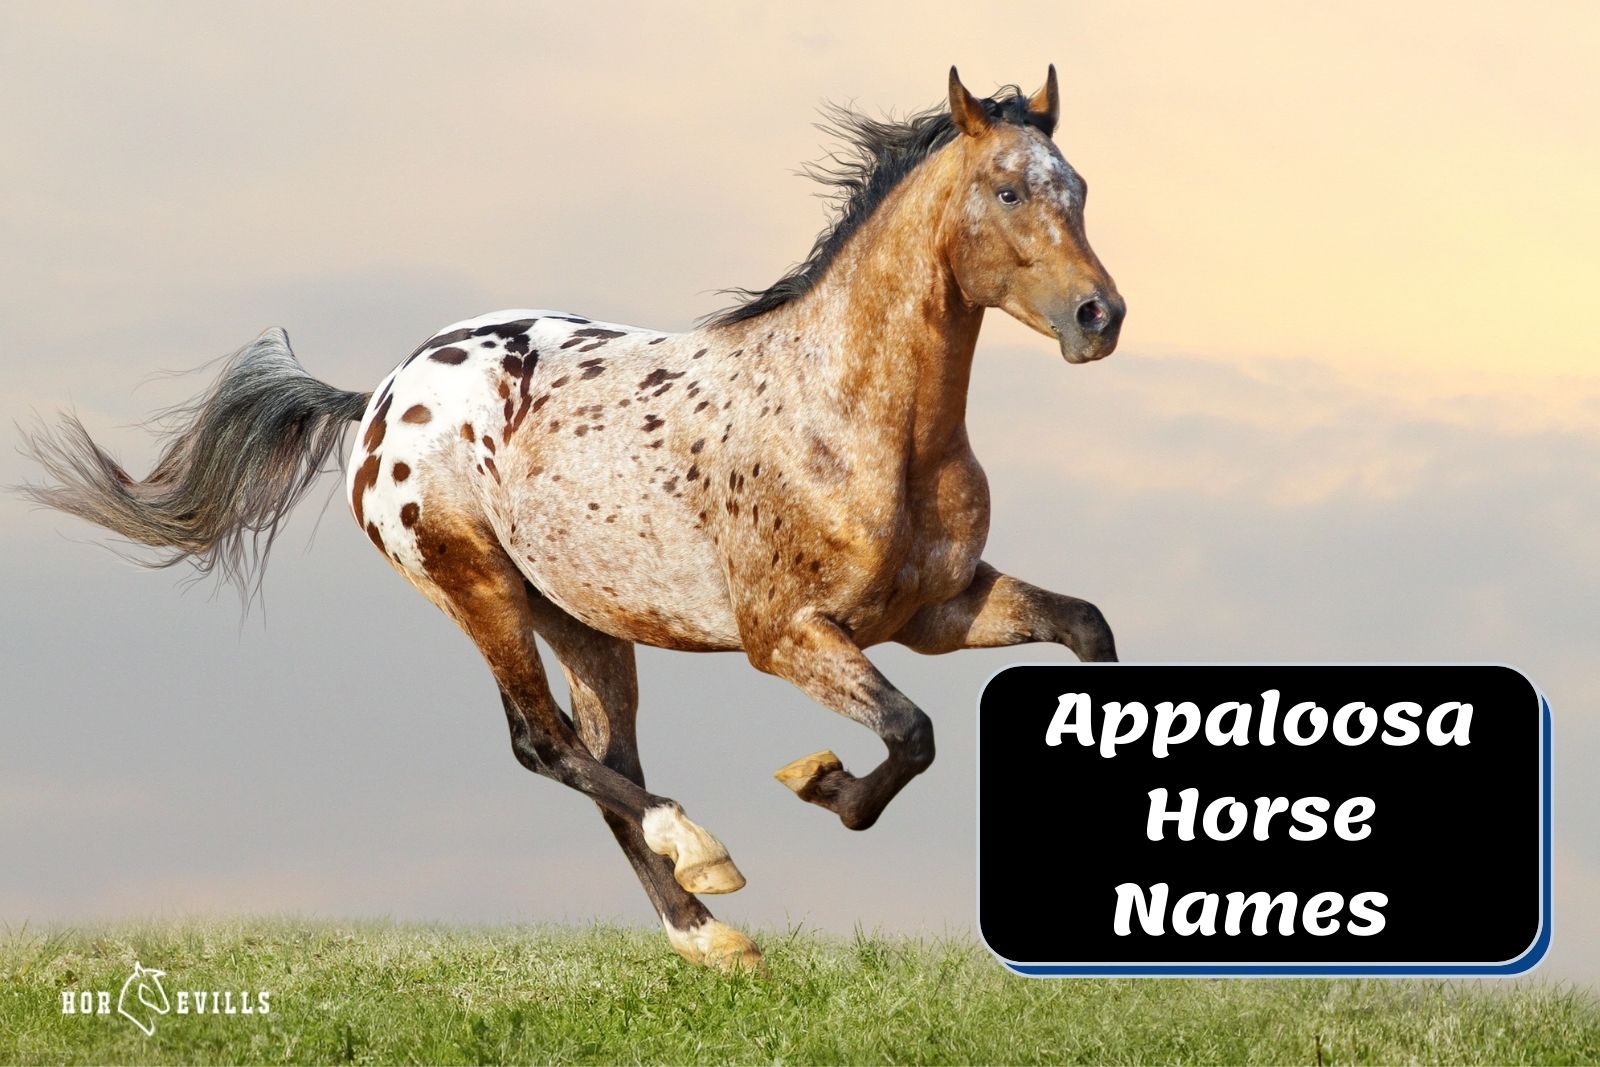 appaloosa stallion beside Appaloosa Horse Names signage